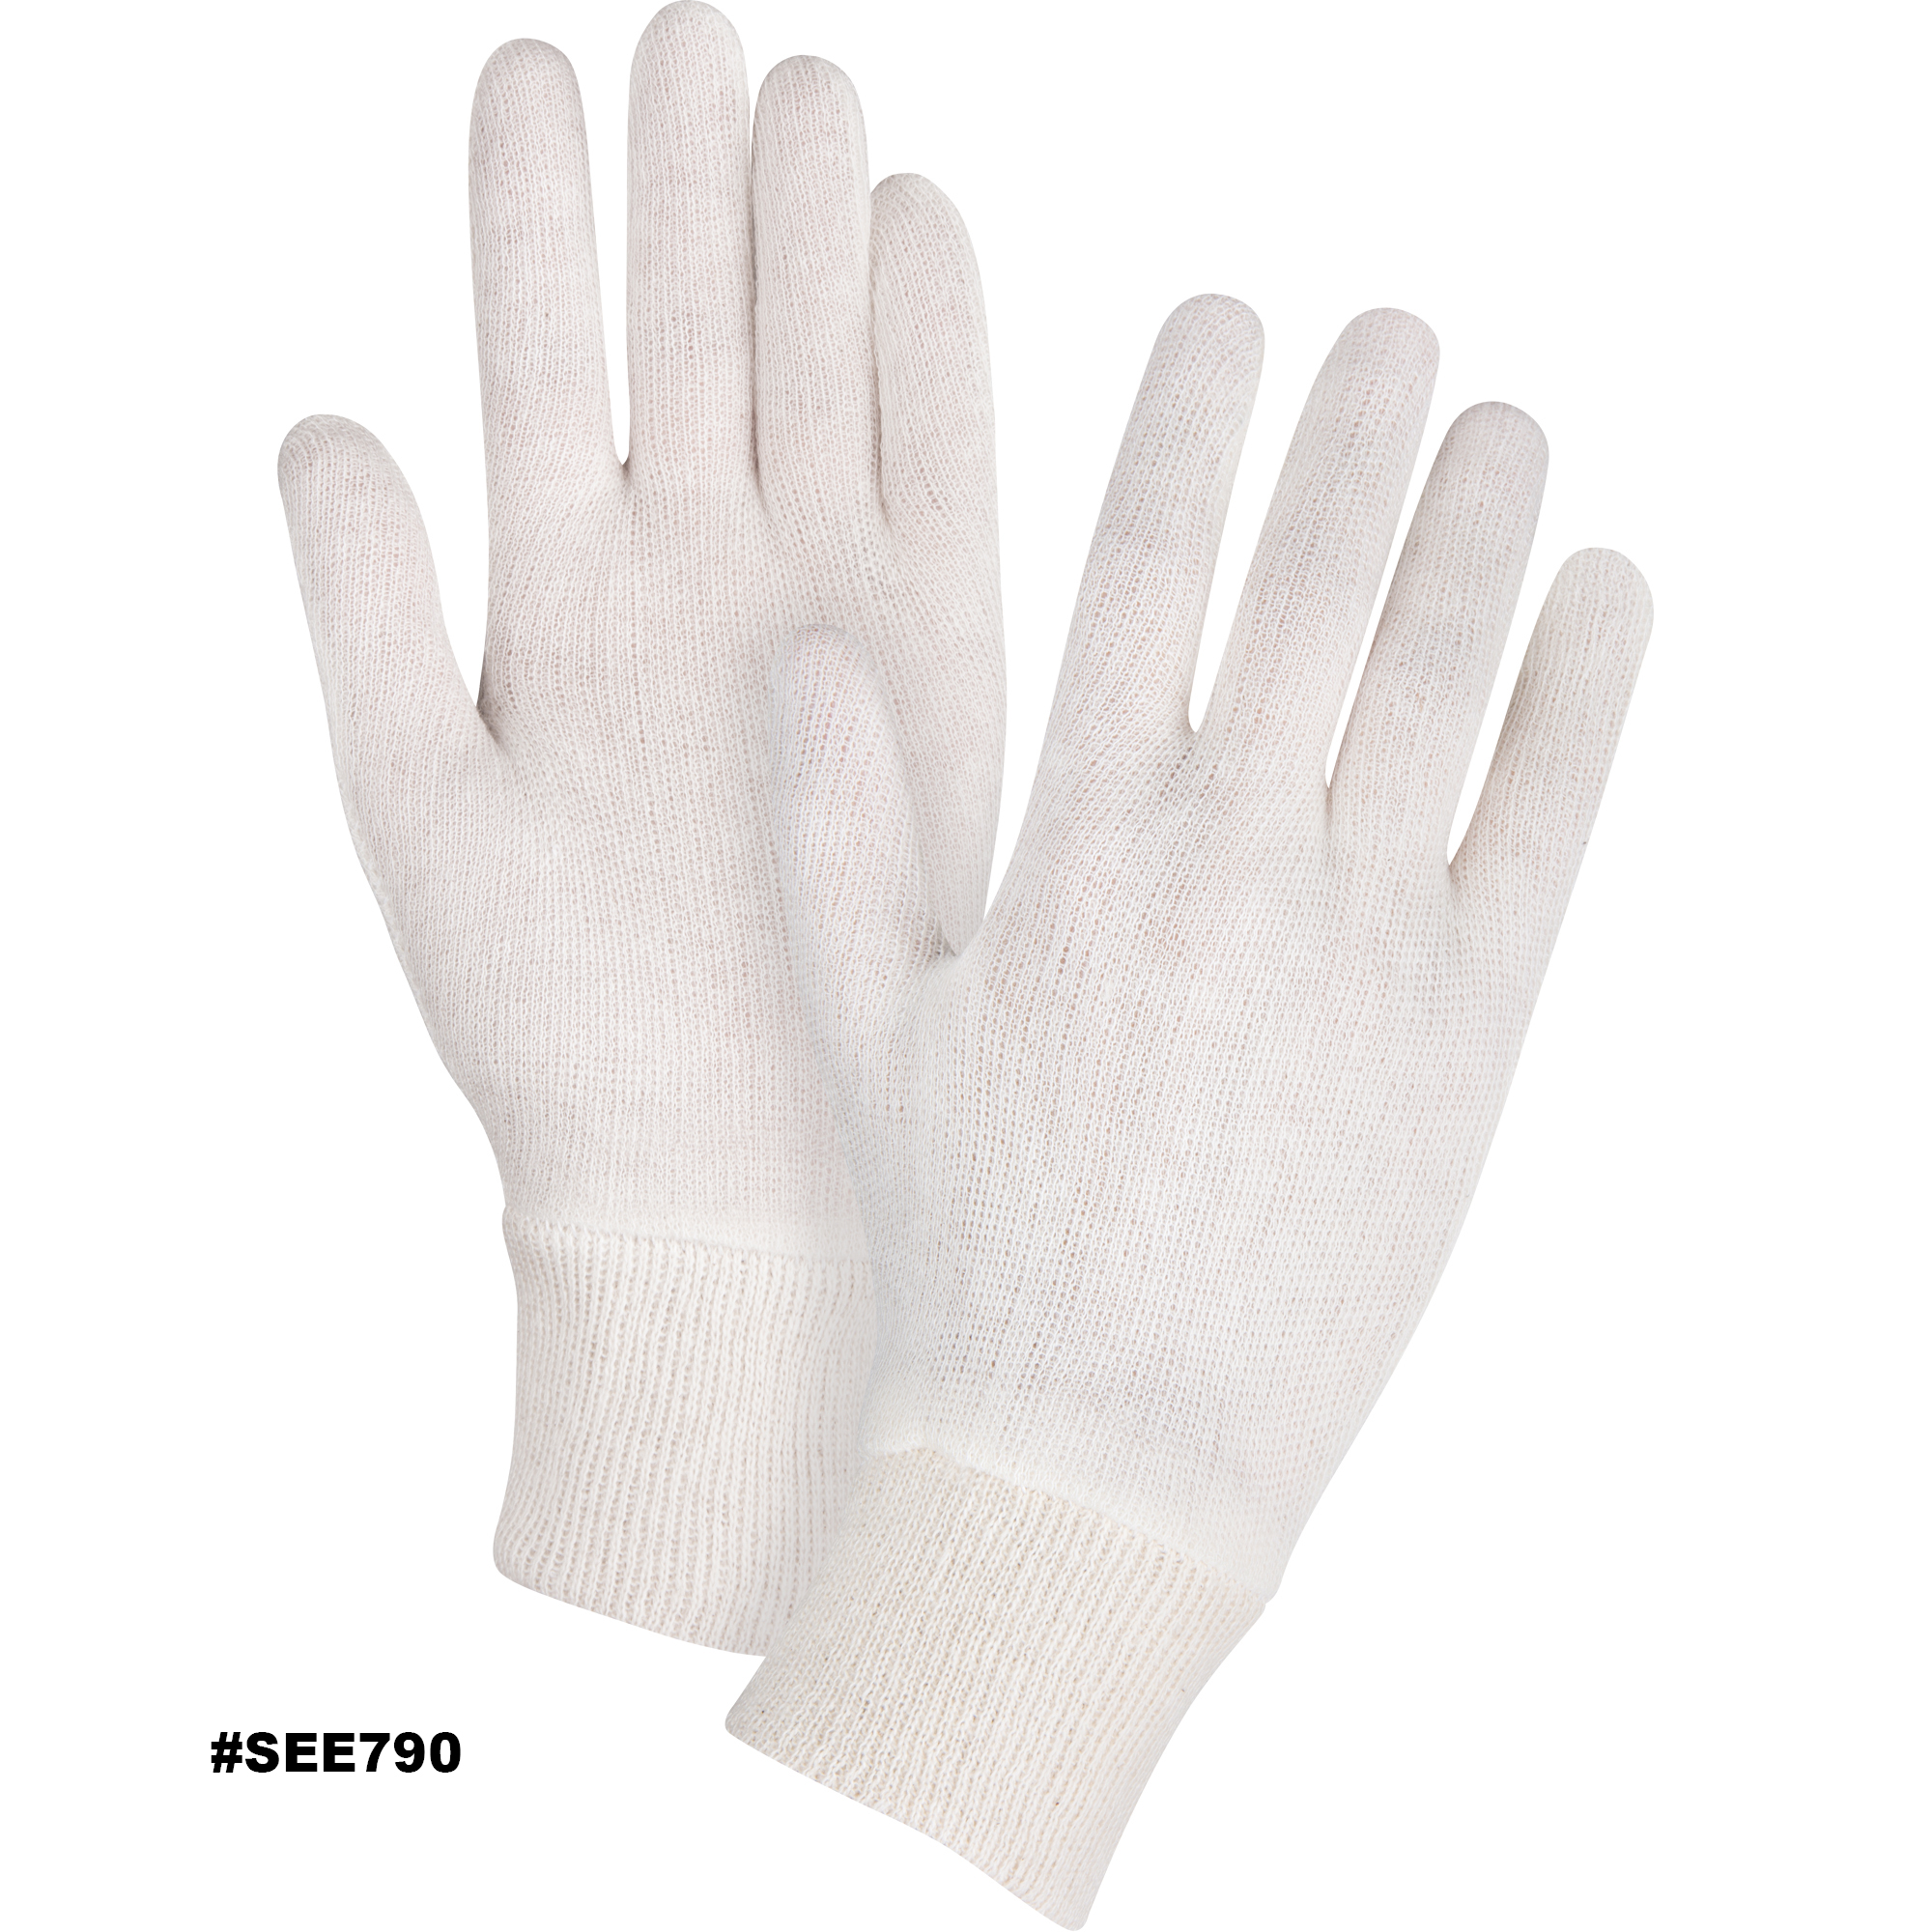 Zenith Inspection Gloves, Poly/Cotton, Knit Wrist Cuff, Men's